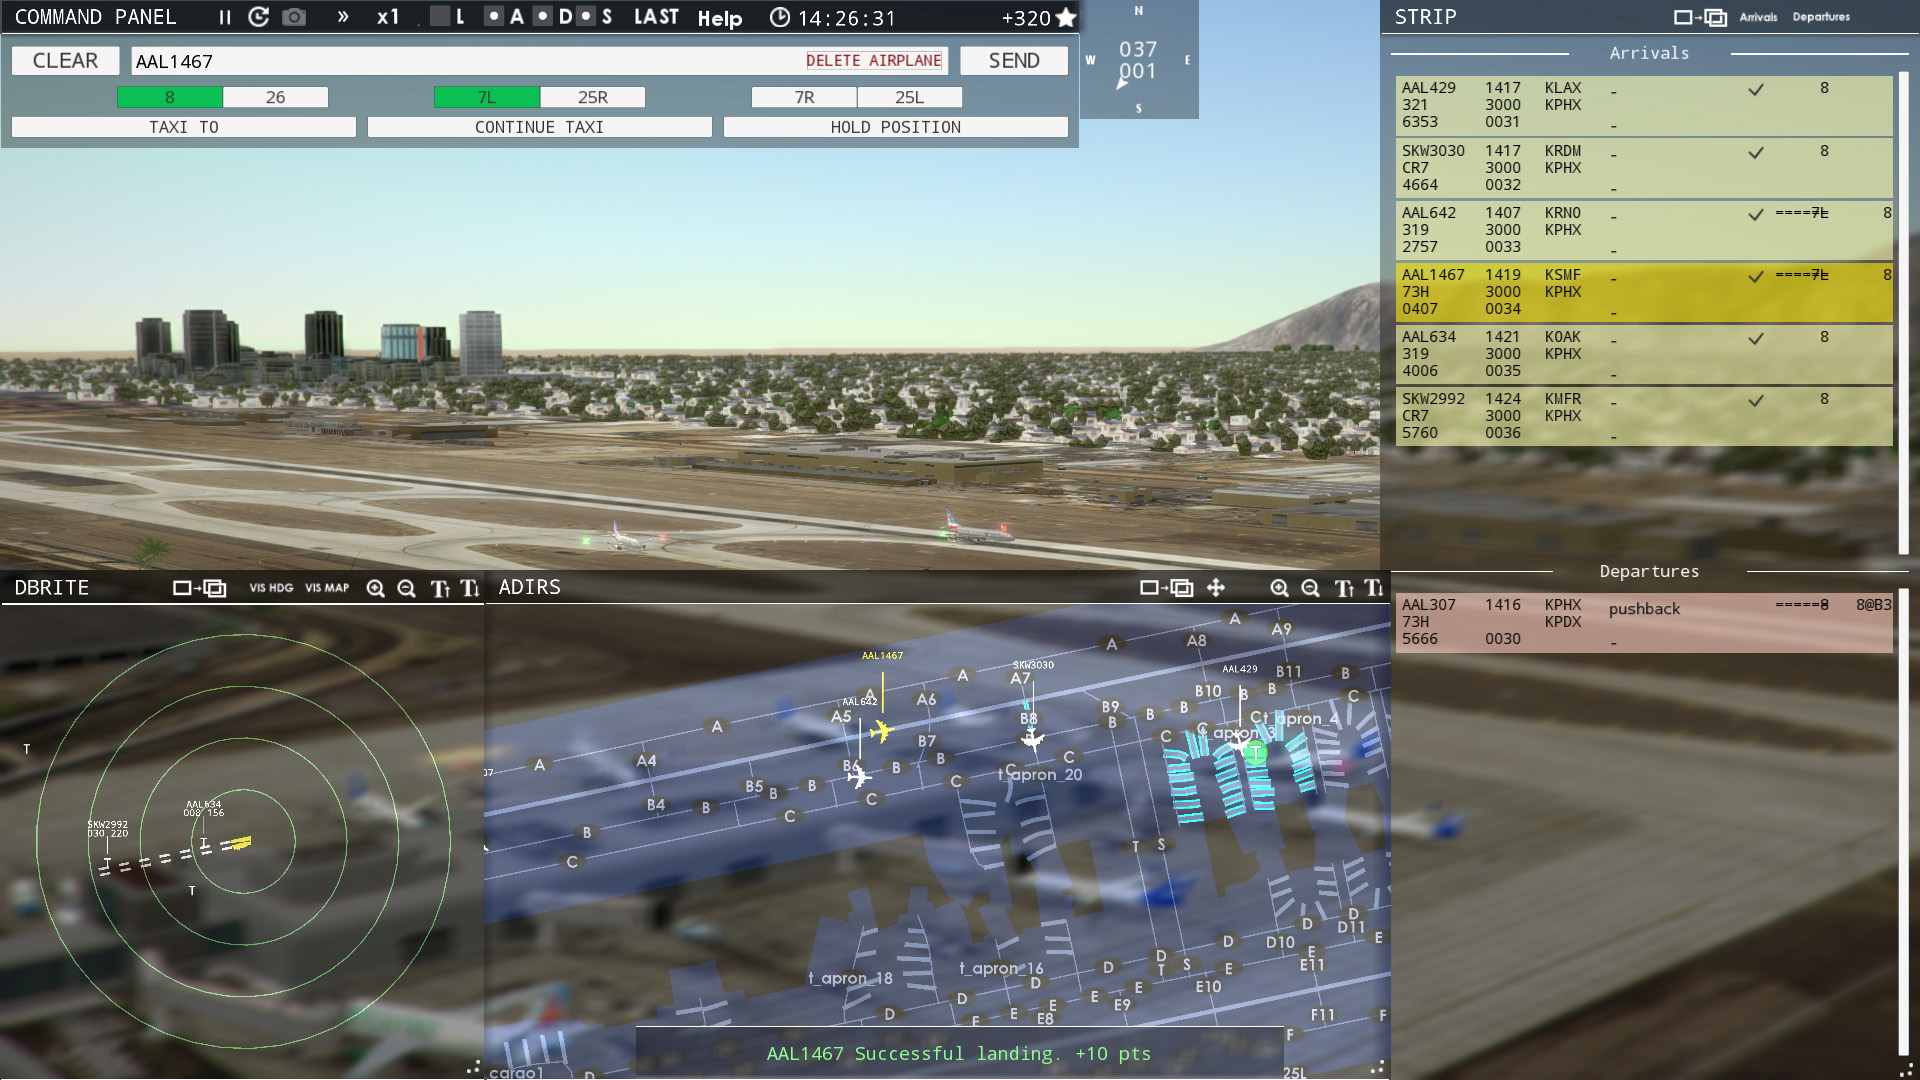 T3D KPHX Taxiway B7 not connected! - ATC Simulators - The simFlight ...